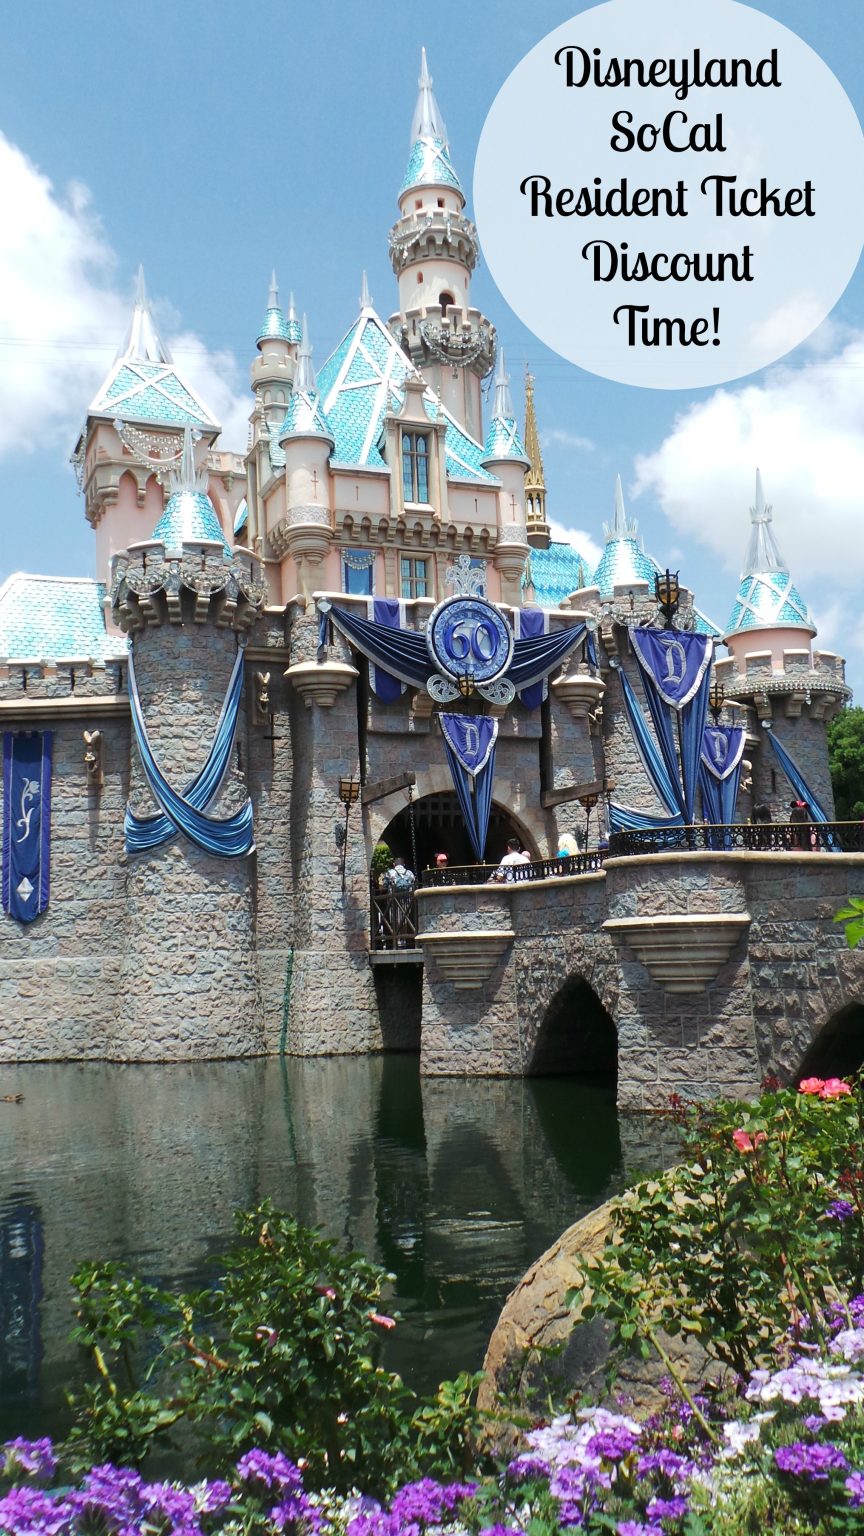 Disneyland Discounts for California Residents!